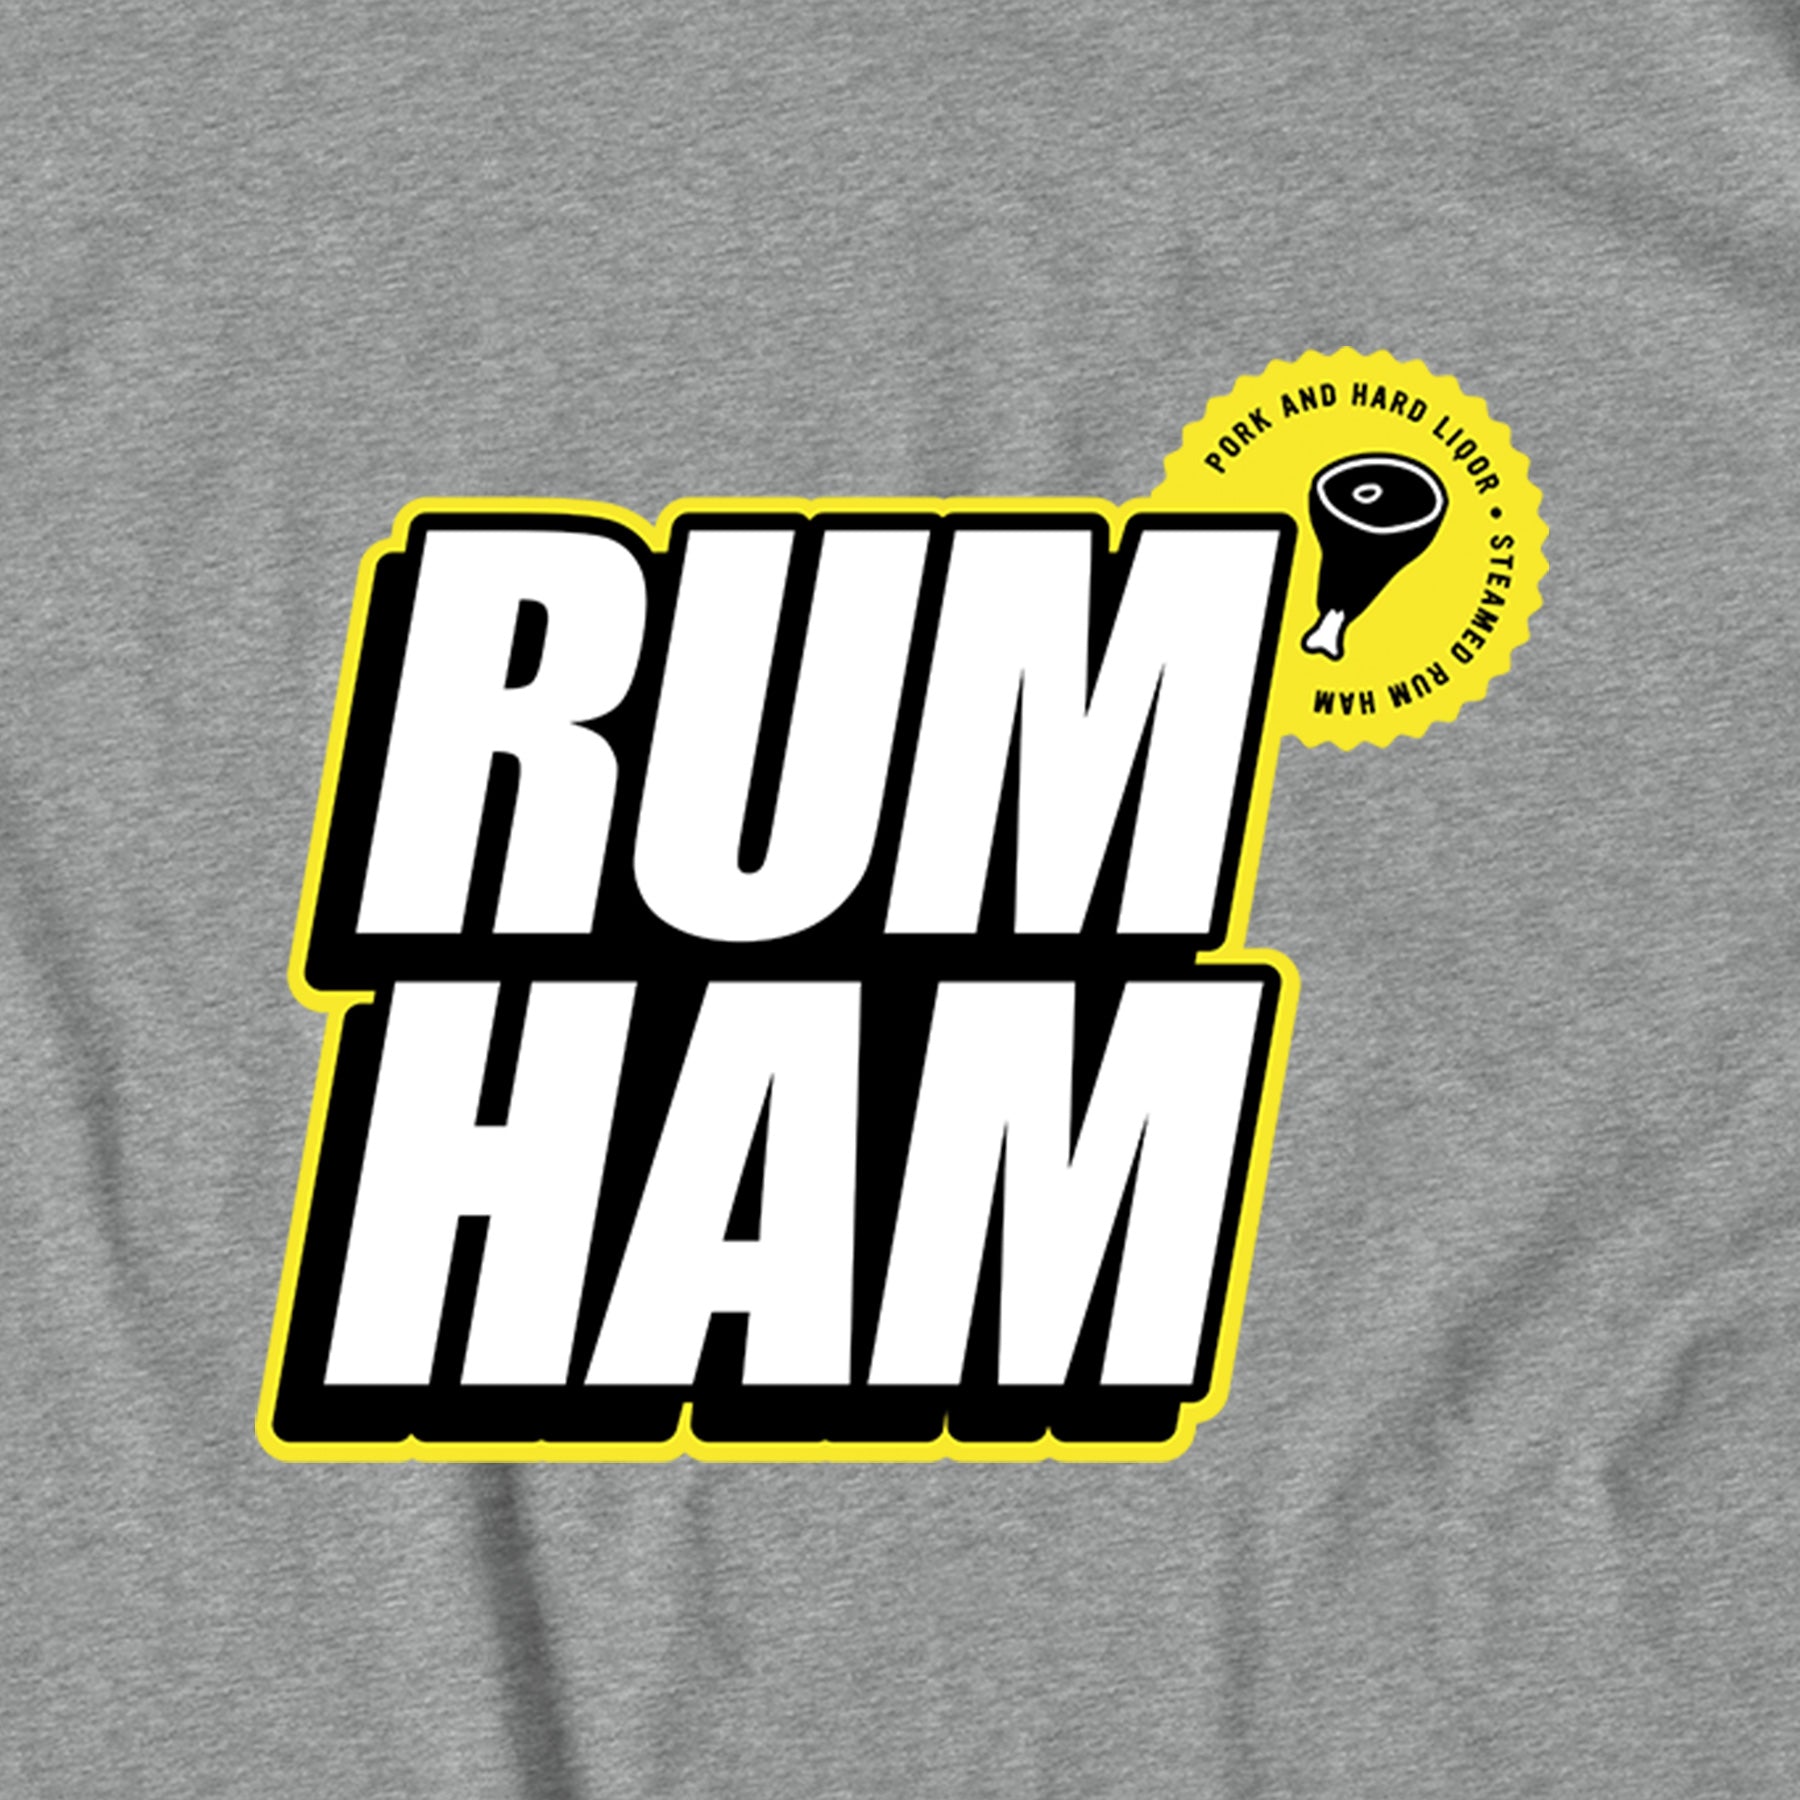 Rum Ham T-Shirt T-Shirt - Heather